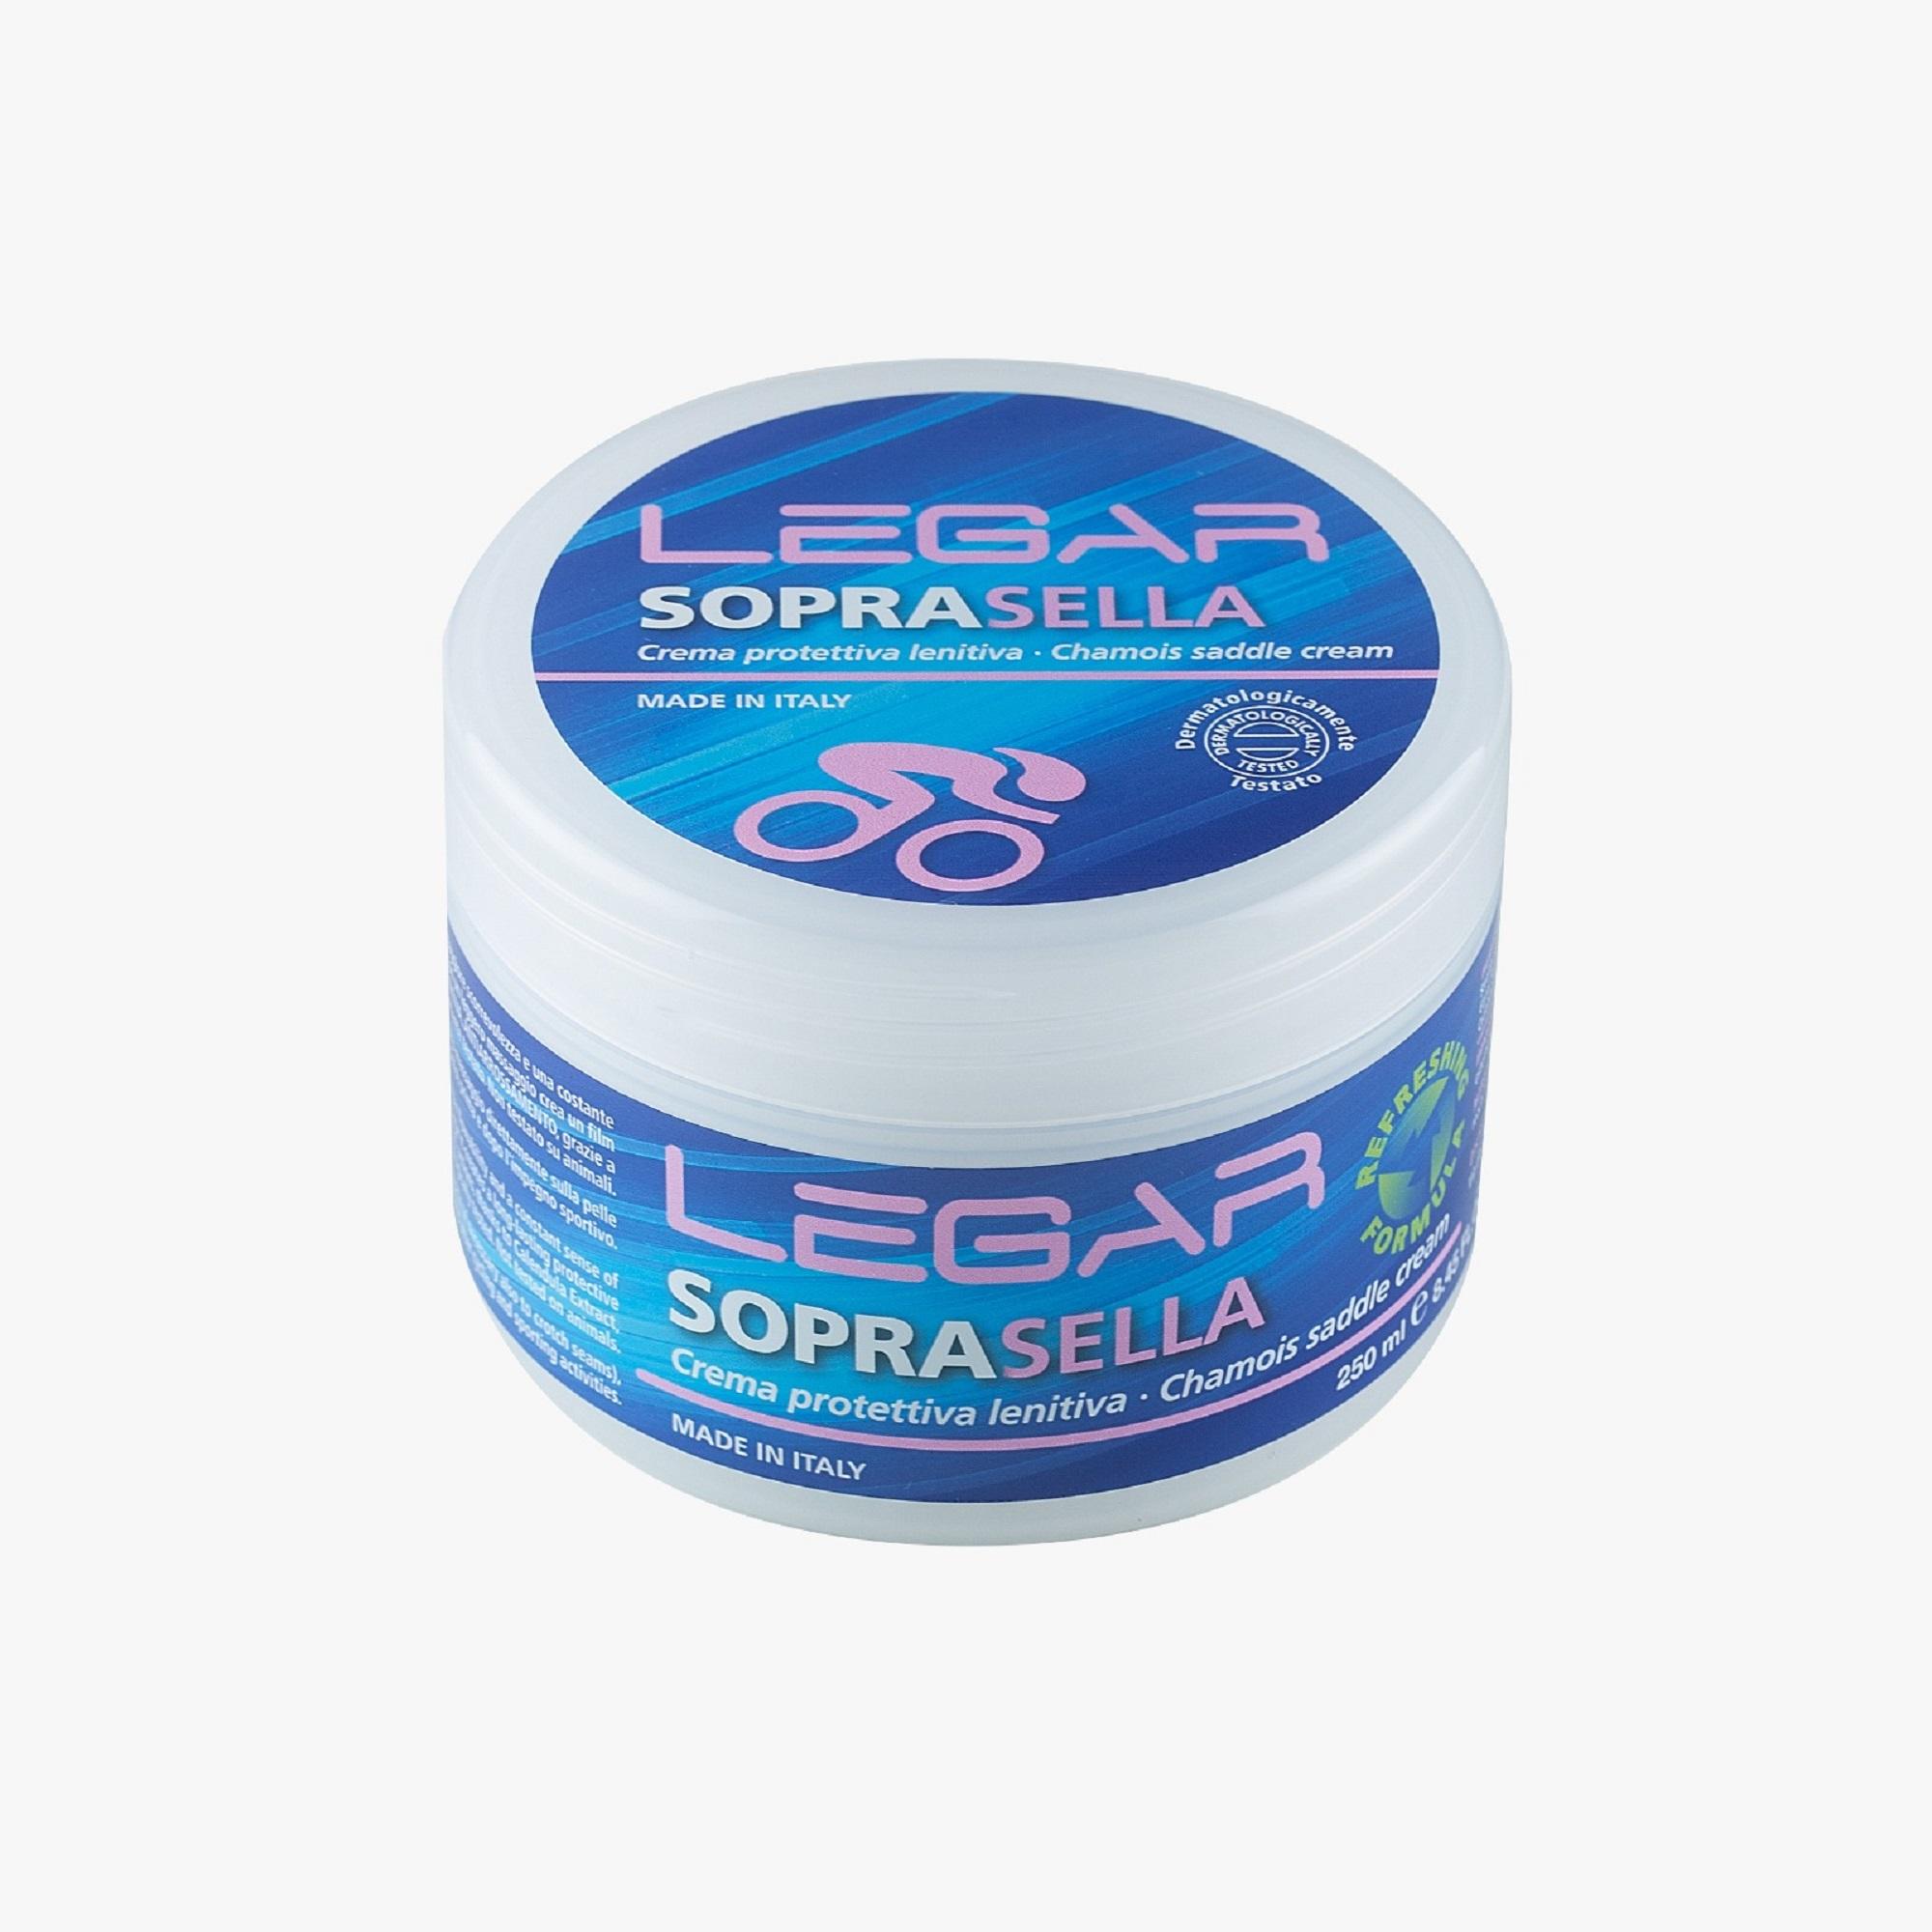 Decathlon | Crema protettiva lenitiva soprasella 250 ml |  Legar